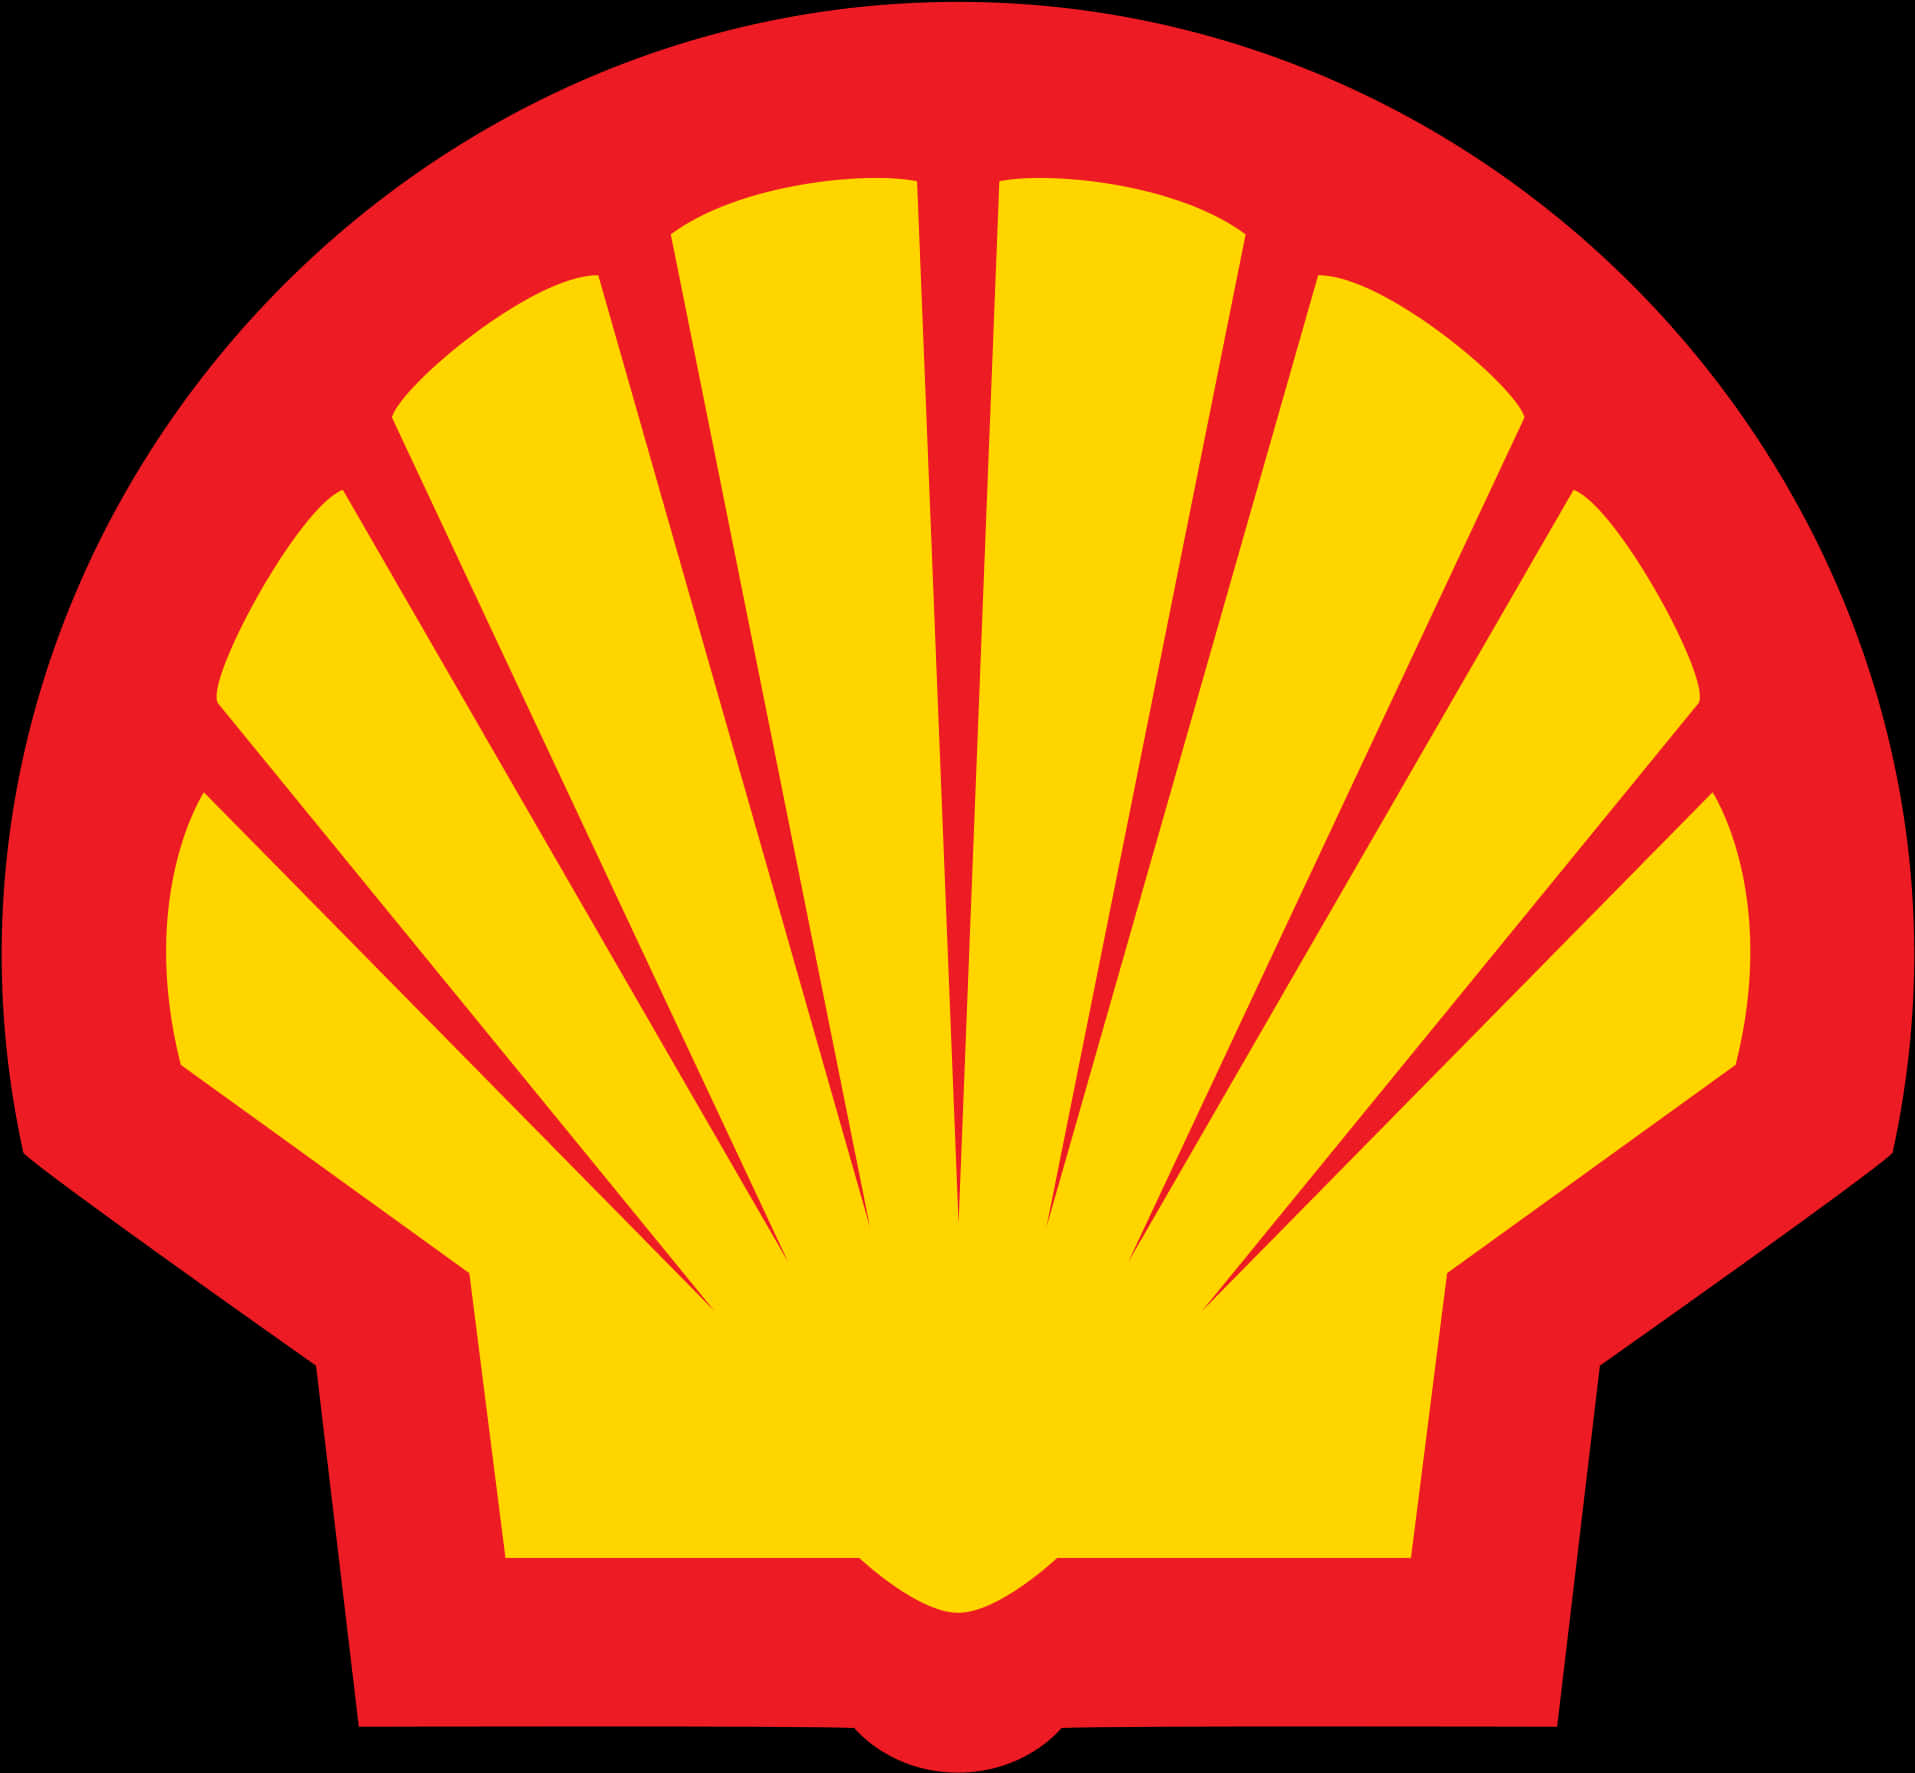 Shell Logo Redand Yellow